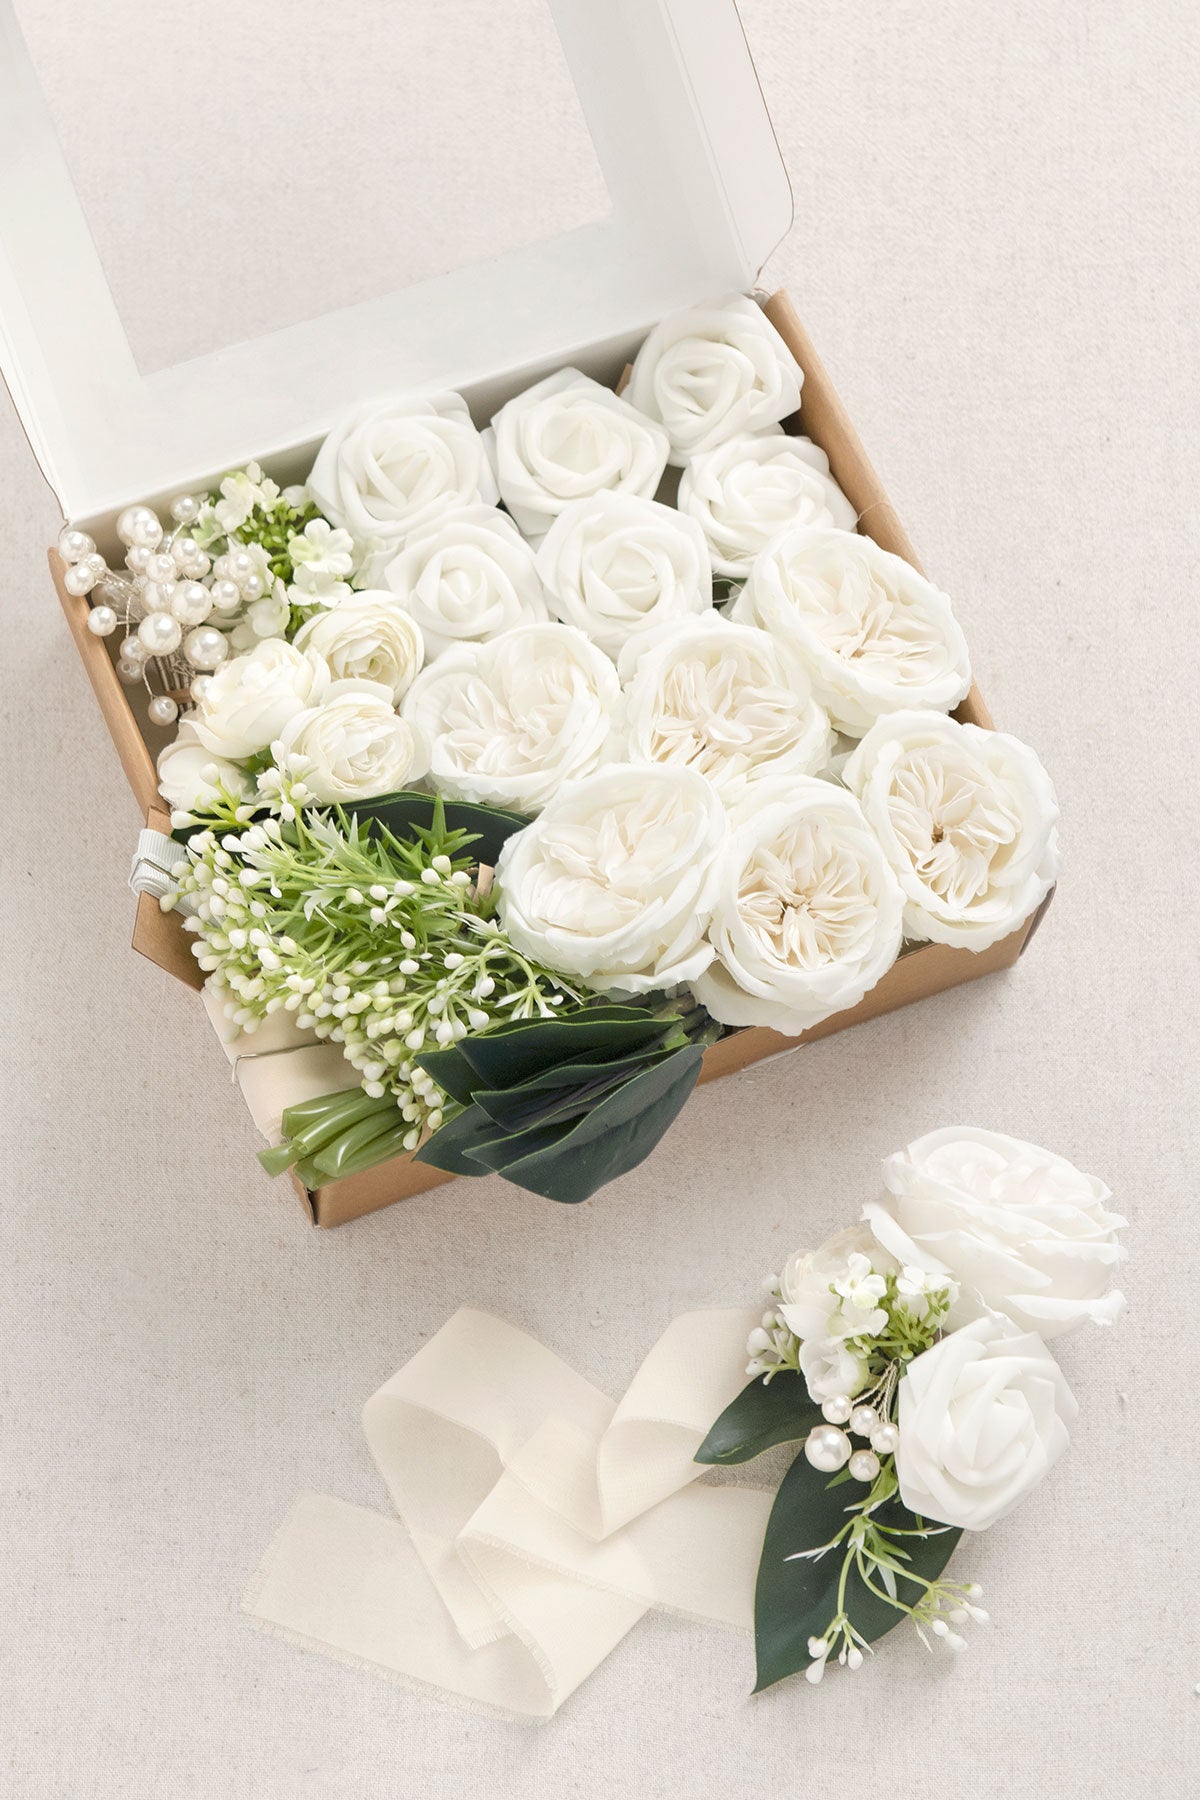 DIY Wedding Flower Packages in White & Sage